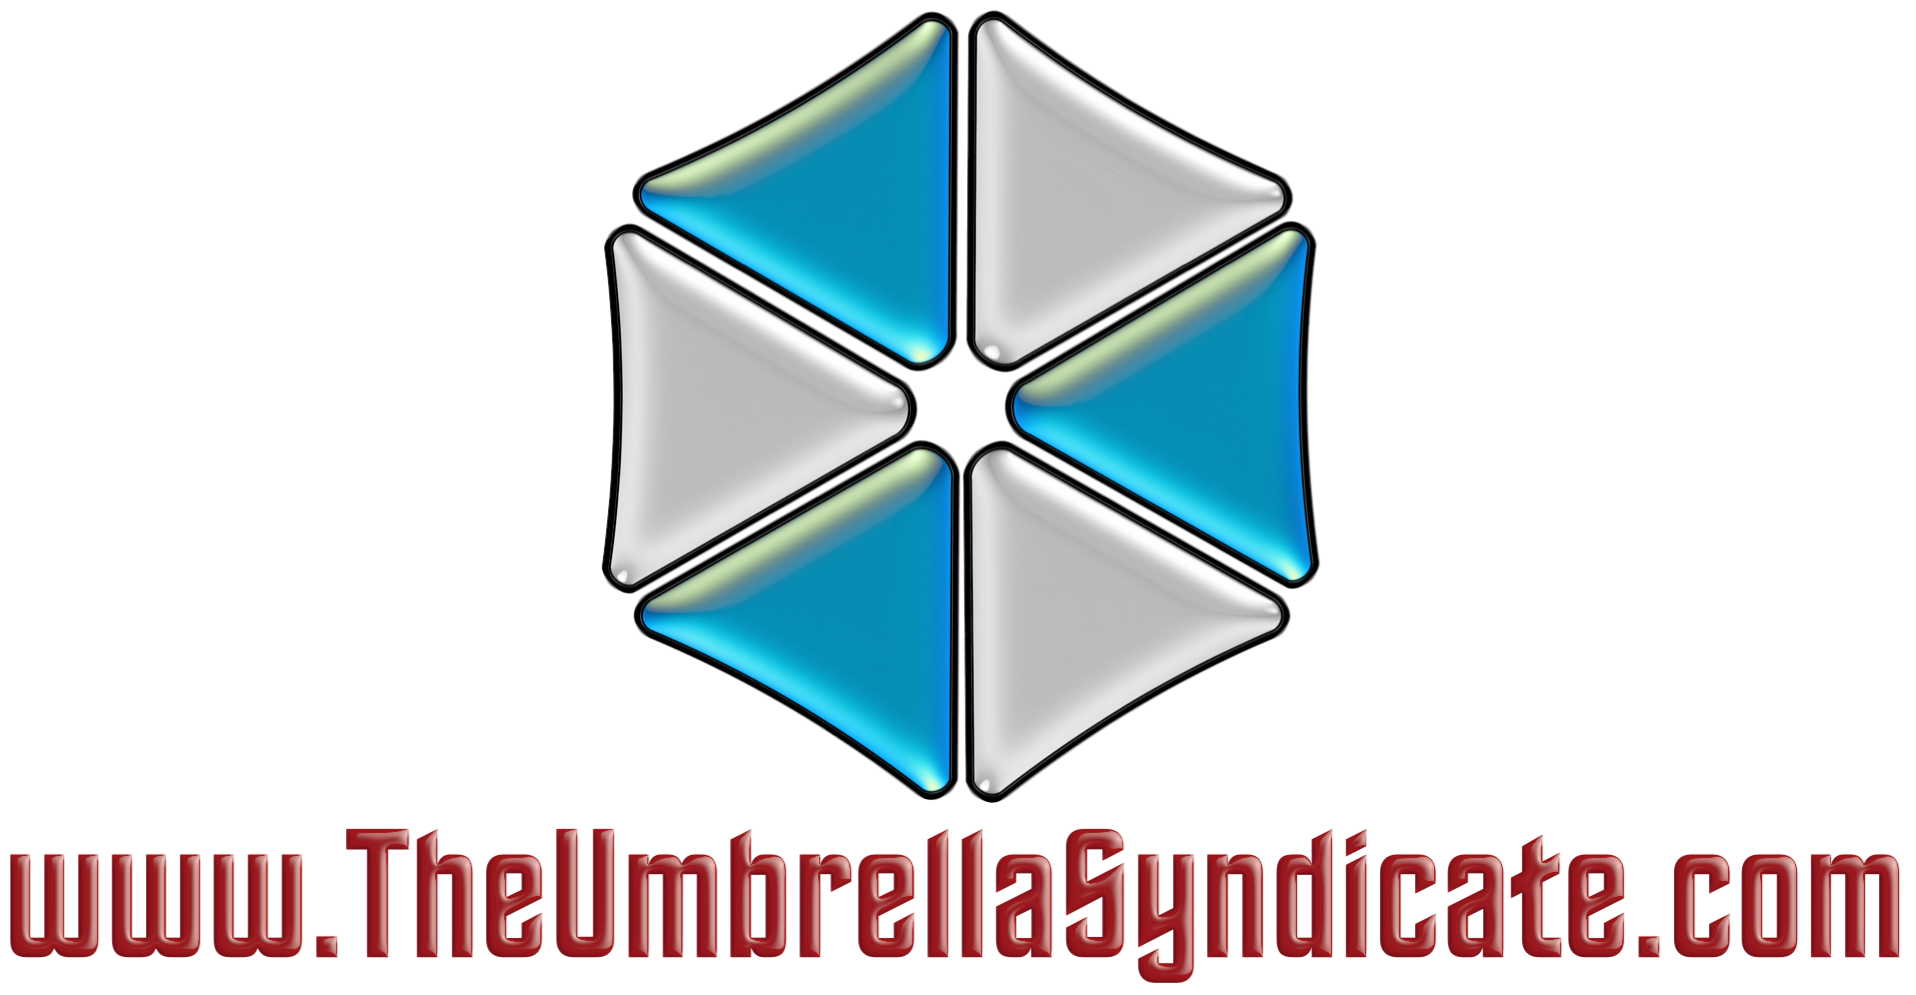 The Umbrella Syndicate logo